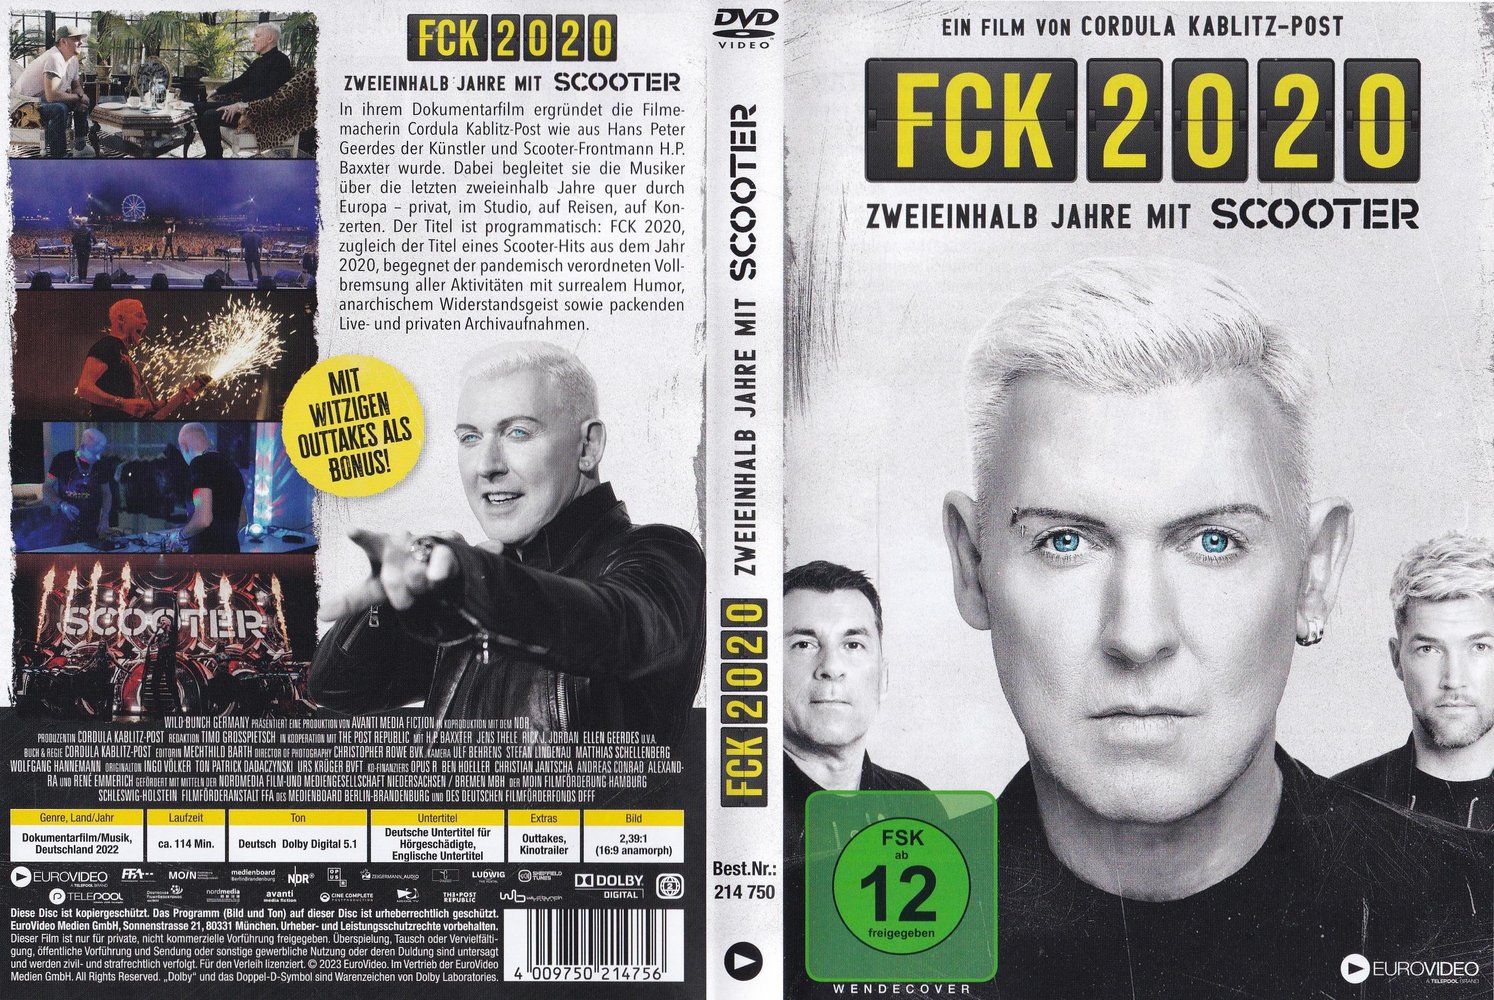 https://gfx.videobuster.de/archive/v/cfyqco5YQfX3KBdCT1rAtowcz0lMkawsyUyRjA2JTJGaW1hmSUyRmpwZWclMka8YzNky2bmMNfqYmPOv9bGMmbfMNouanBnJnI9aKYwMA/fck-2020-dvd-full-cover.jpg